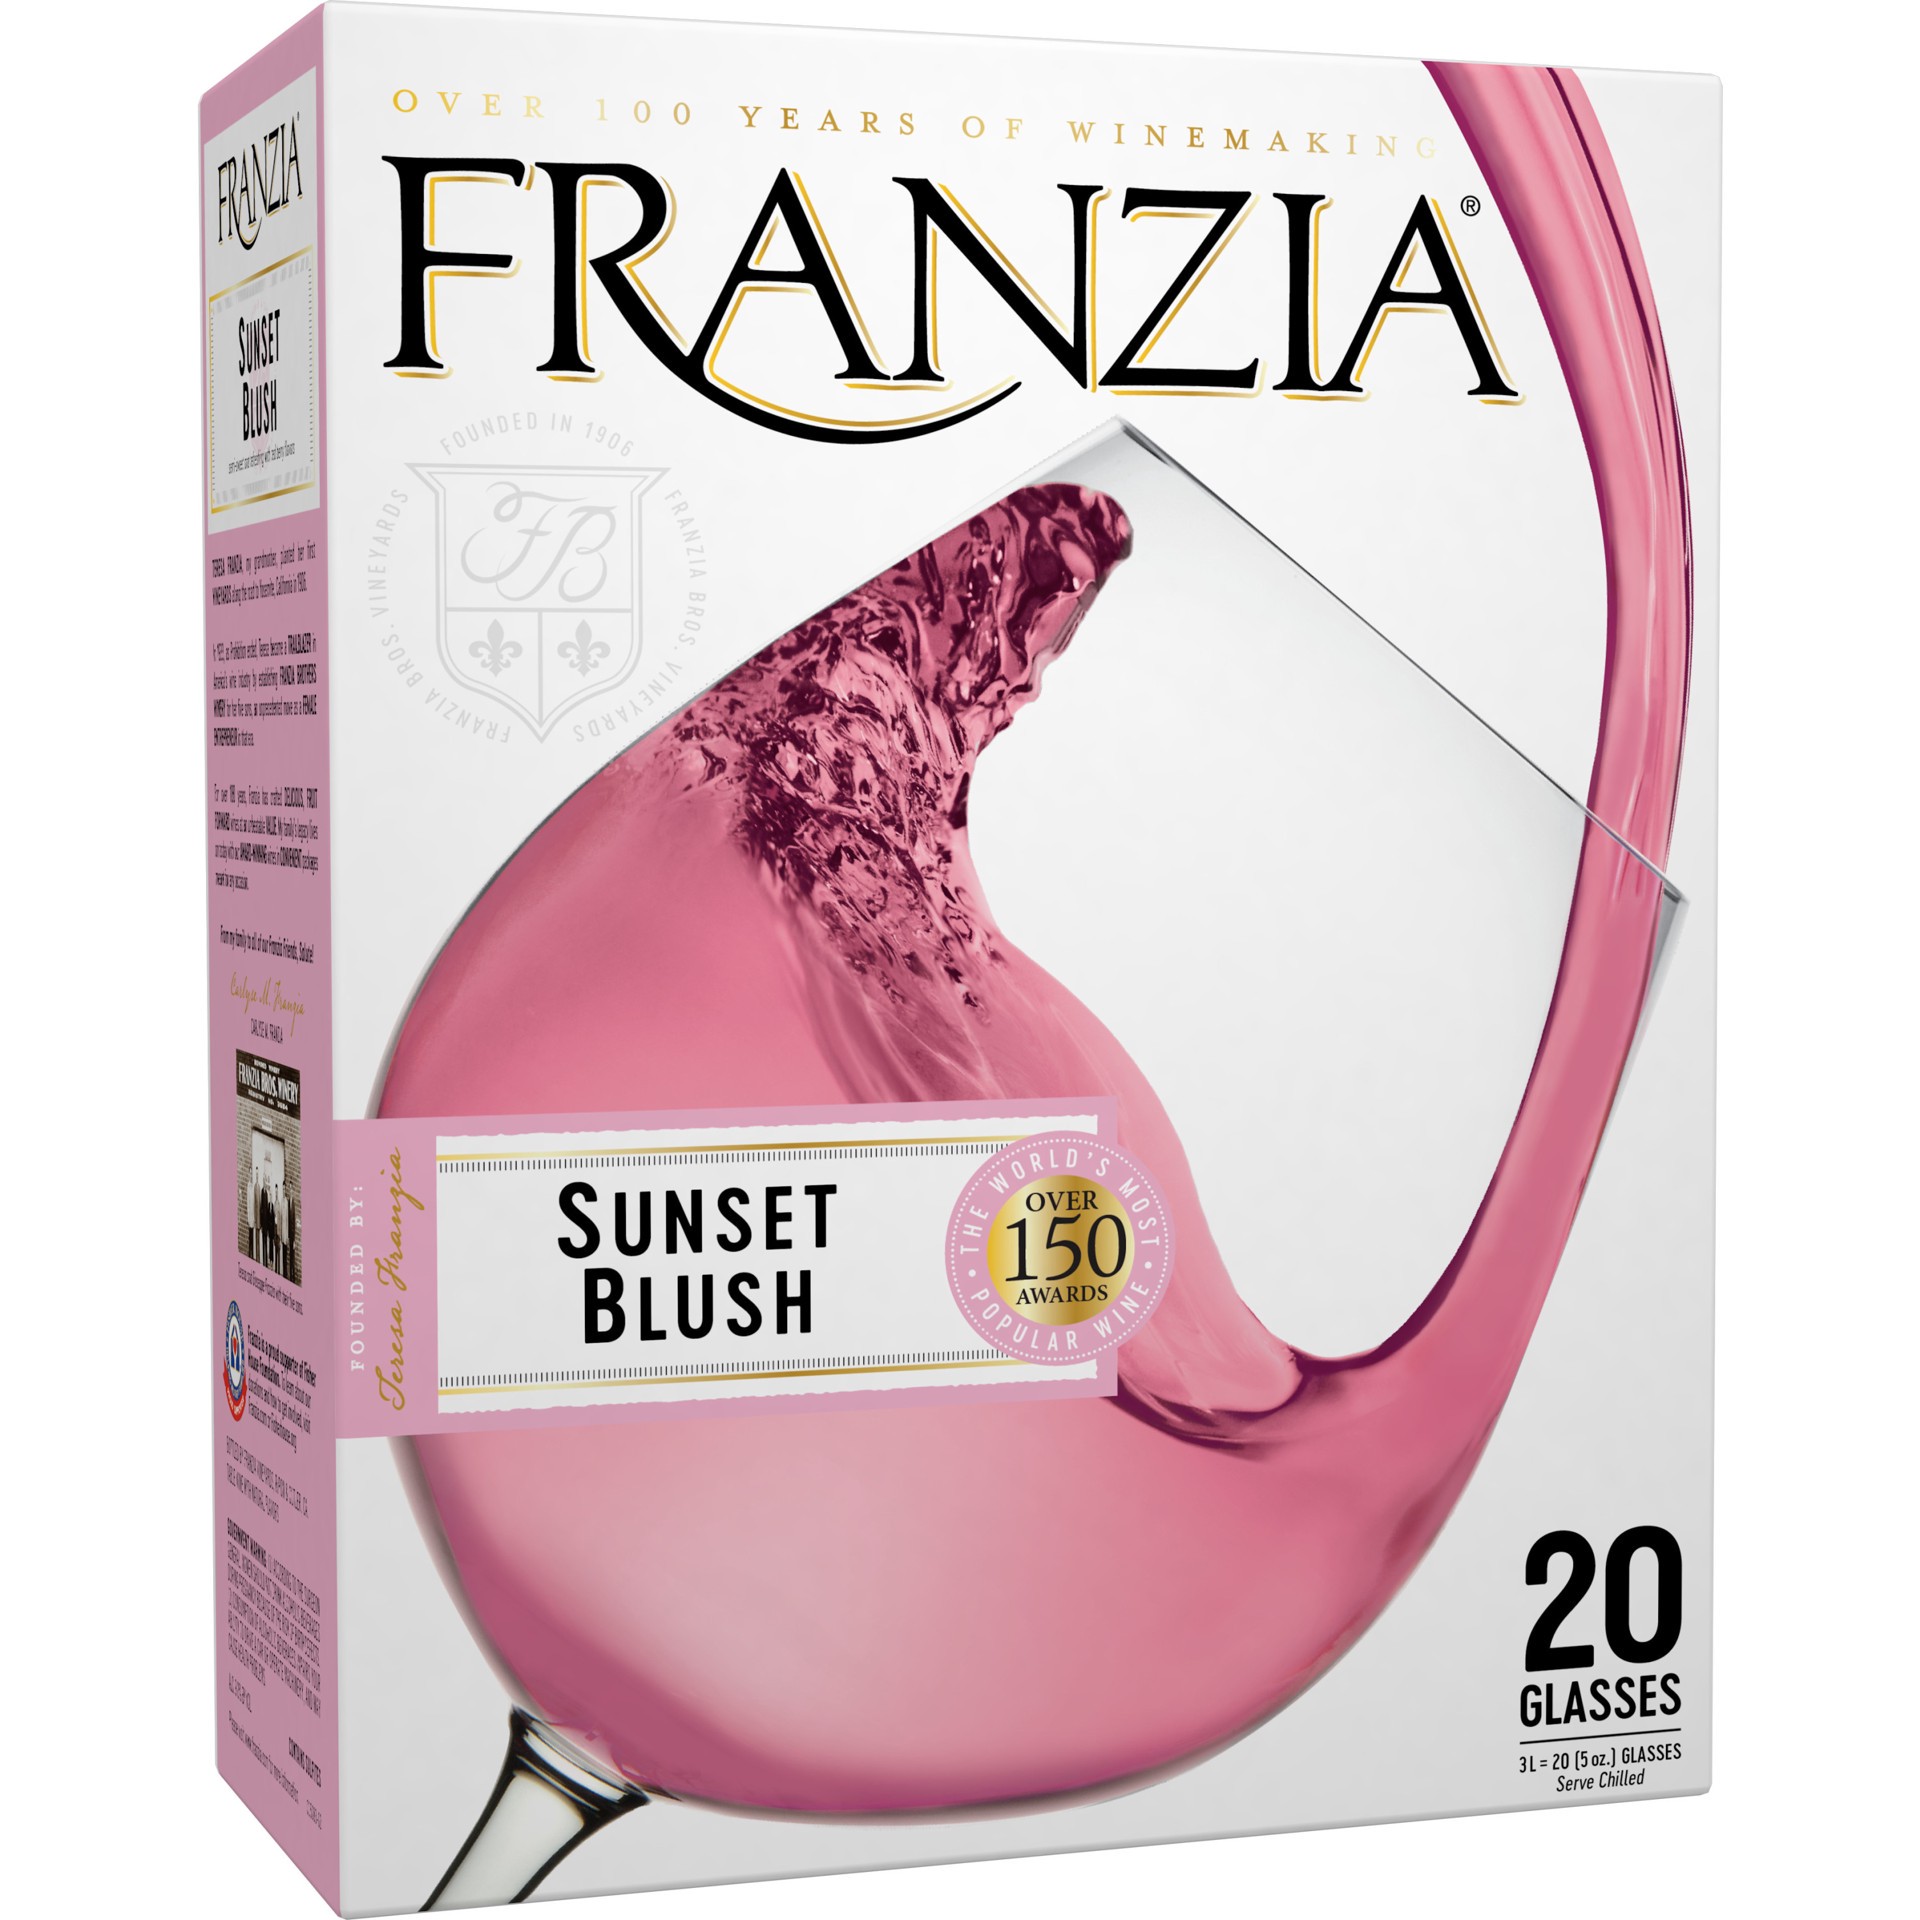 slide 1 of 10, Franzia Sunset Blush Rose Wine - 3L Box, 3 liter